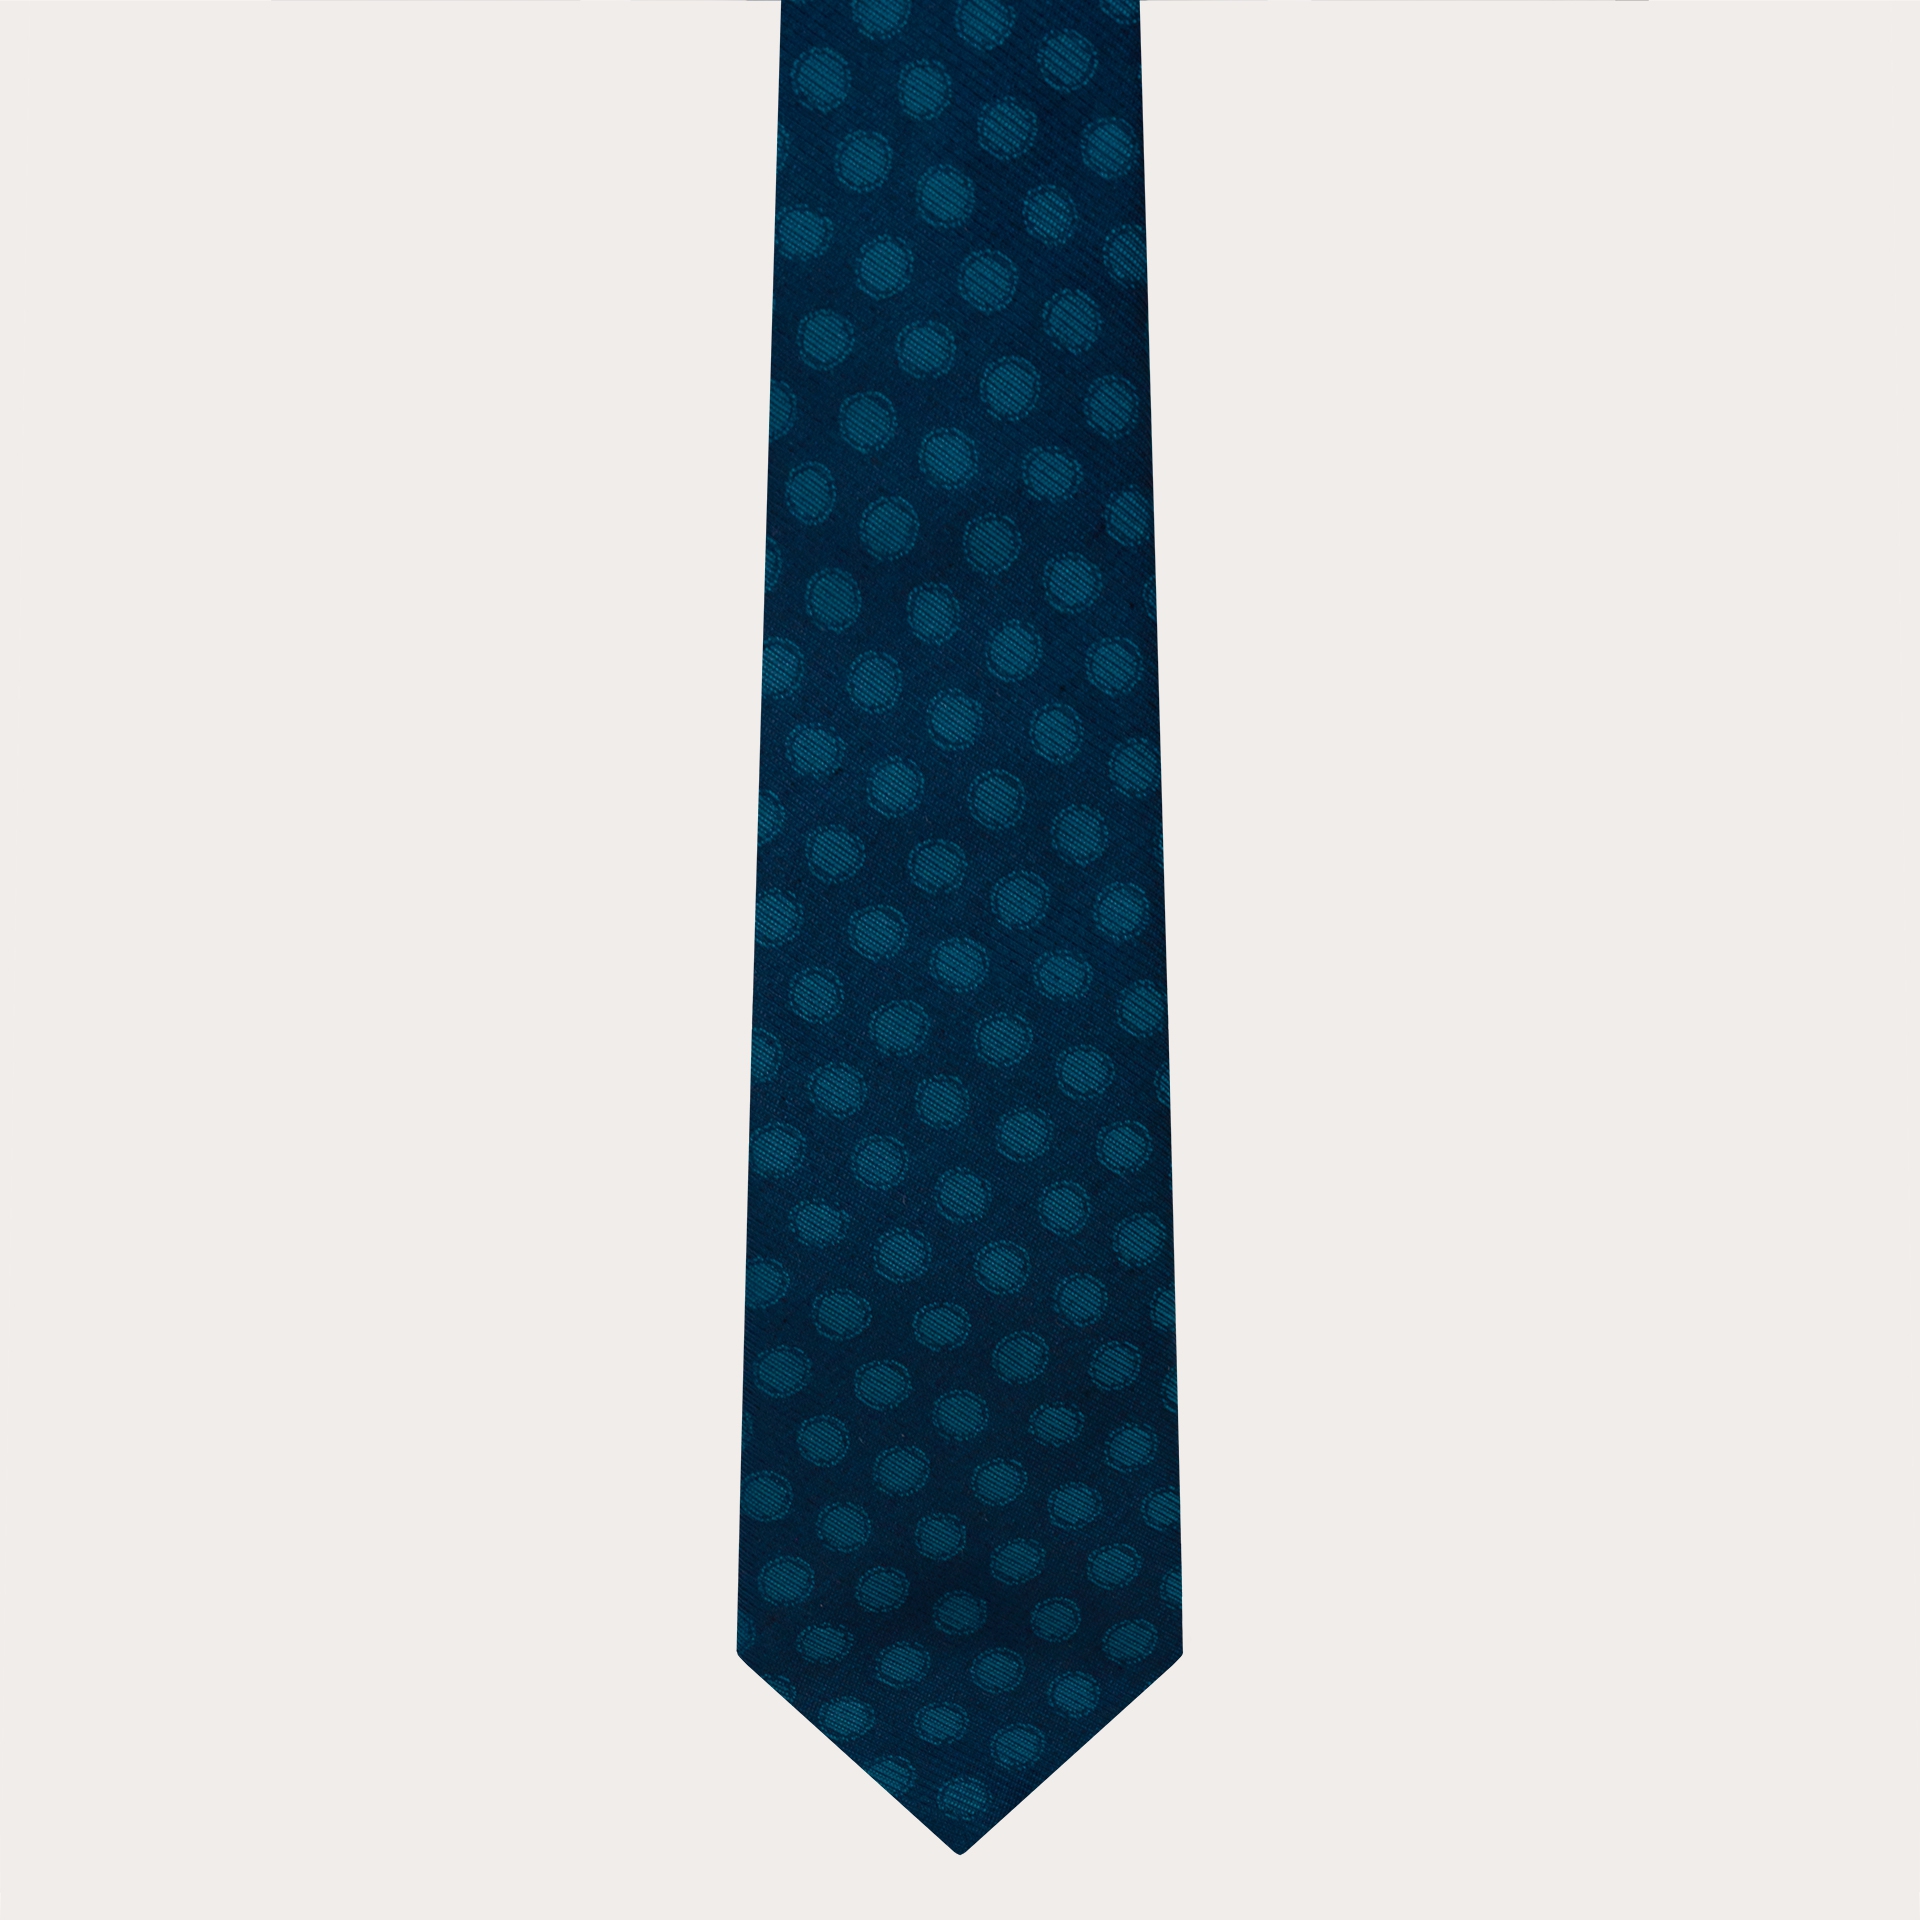 Elegant silk tie, blue with petrol polka dots